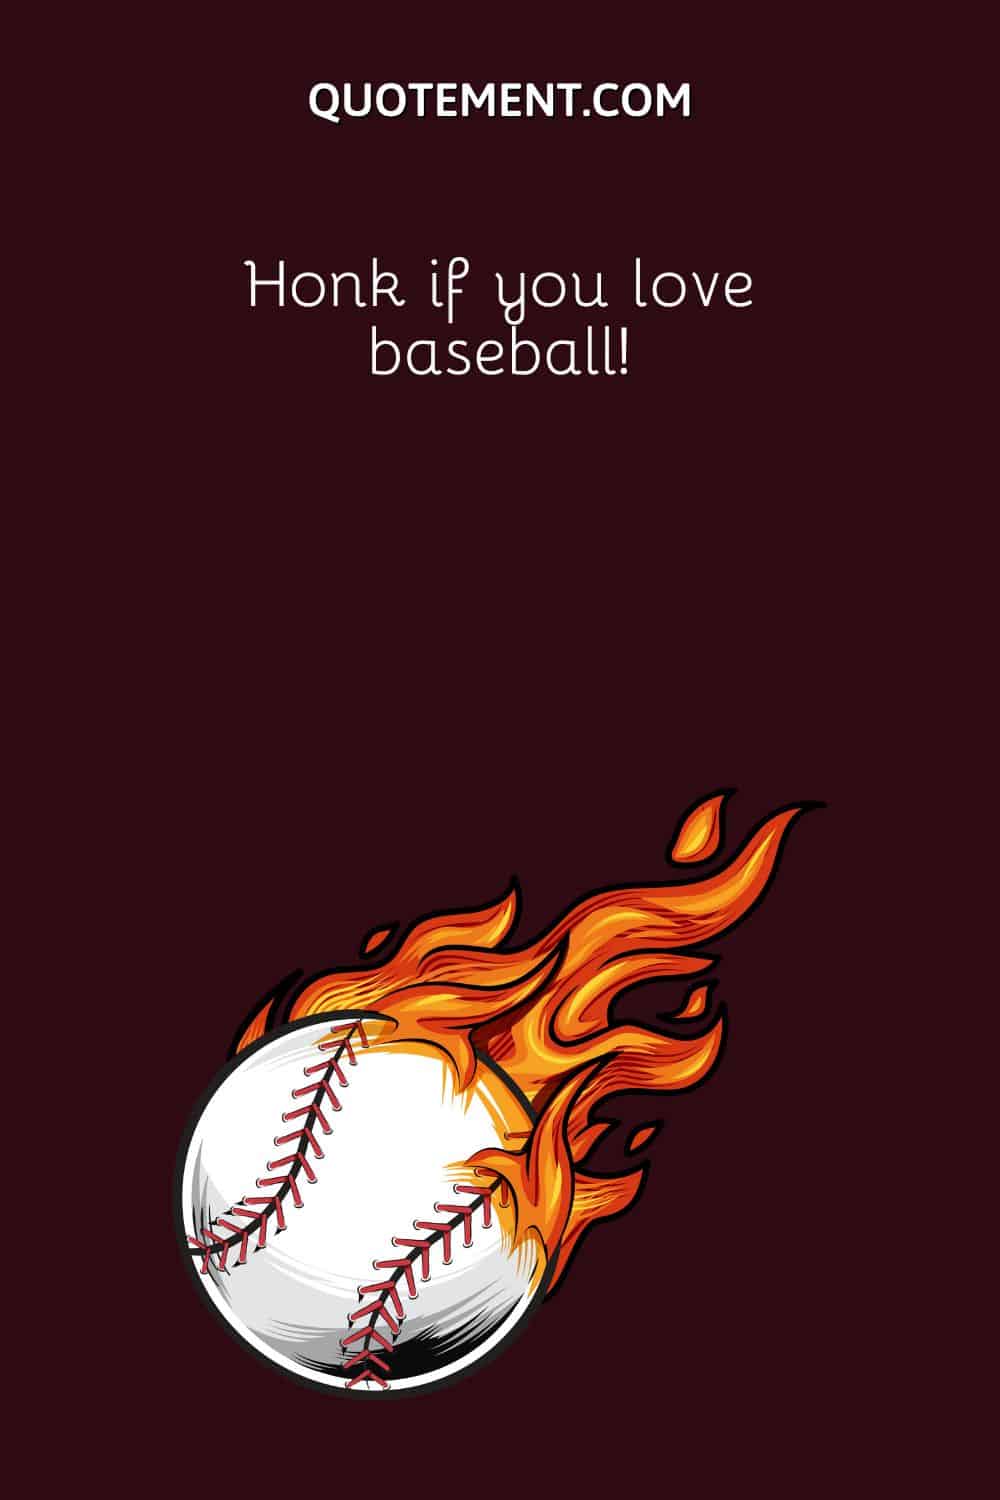 Honk if you love baseball